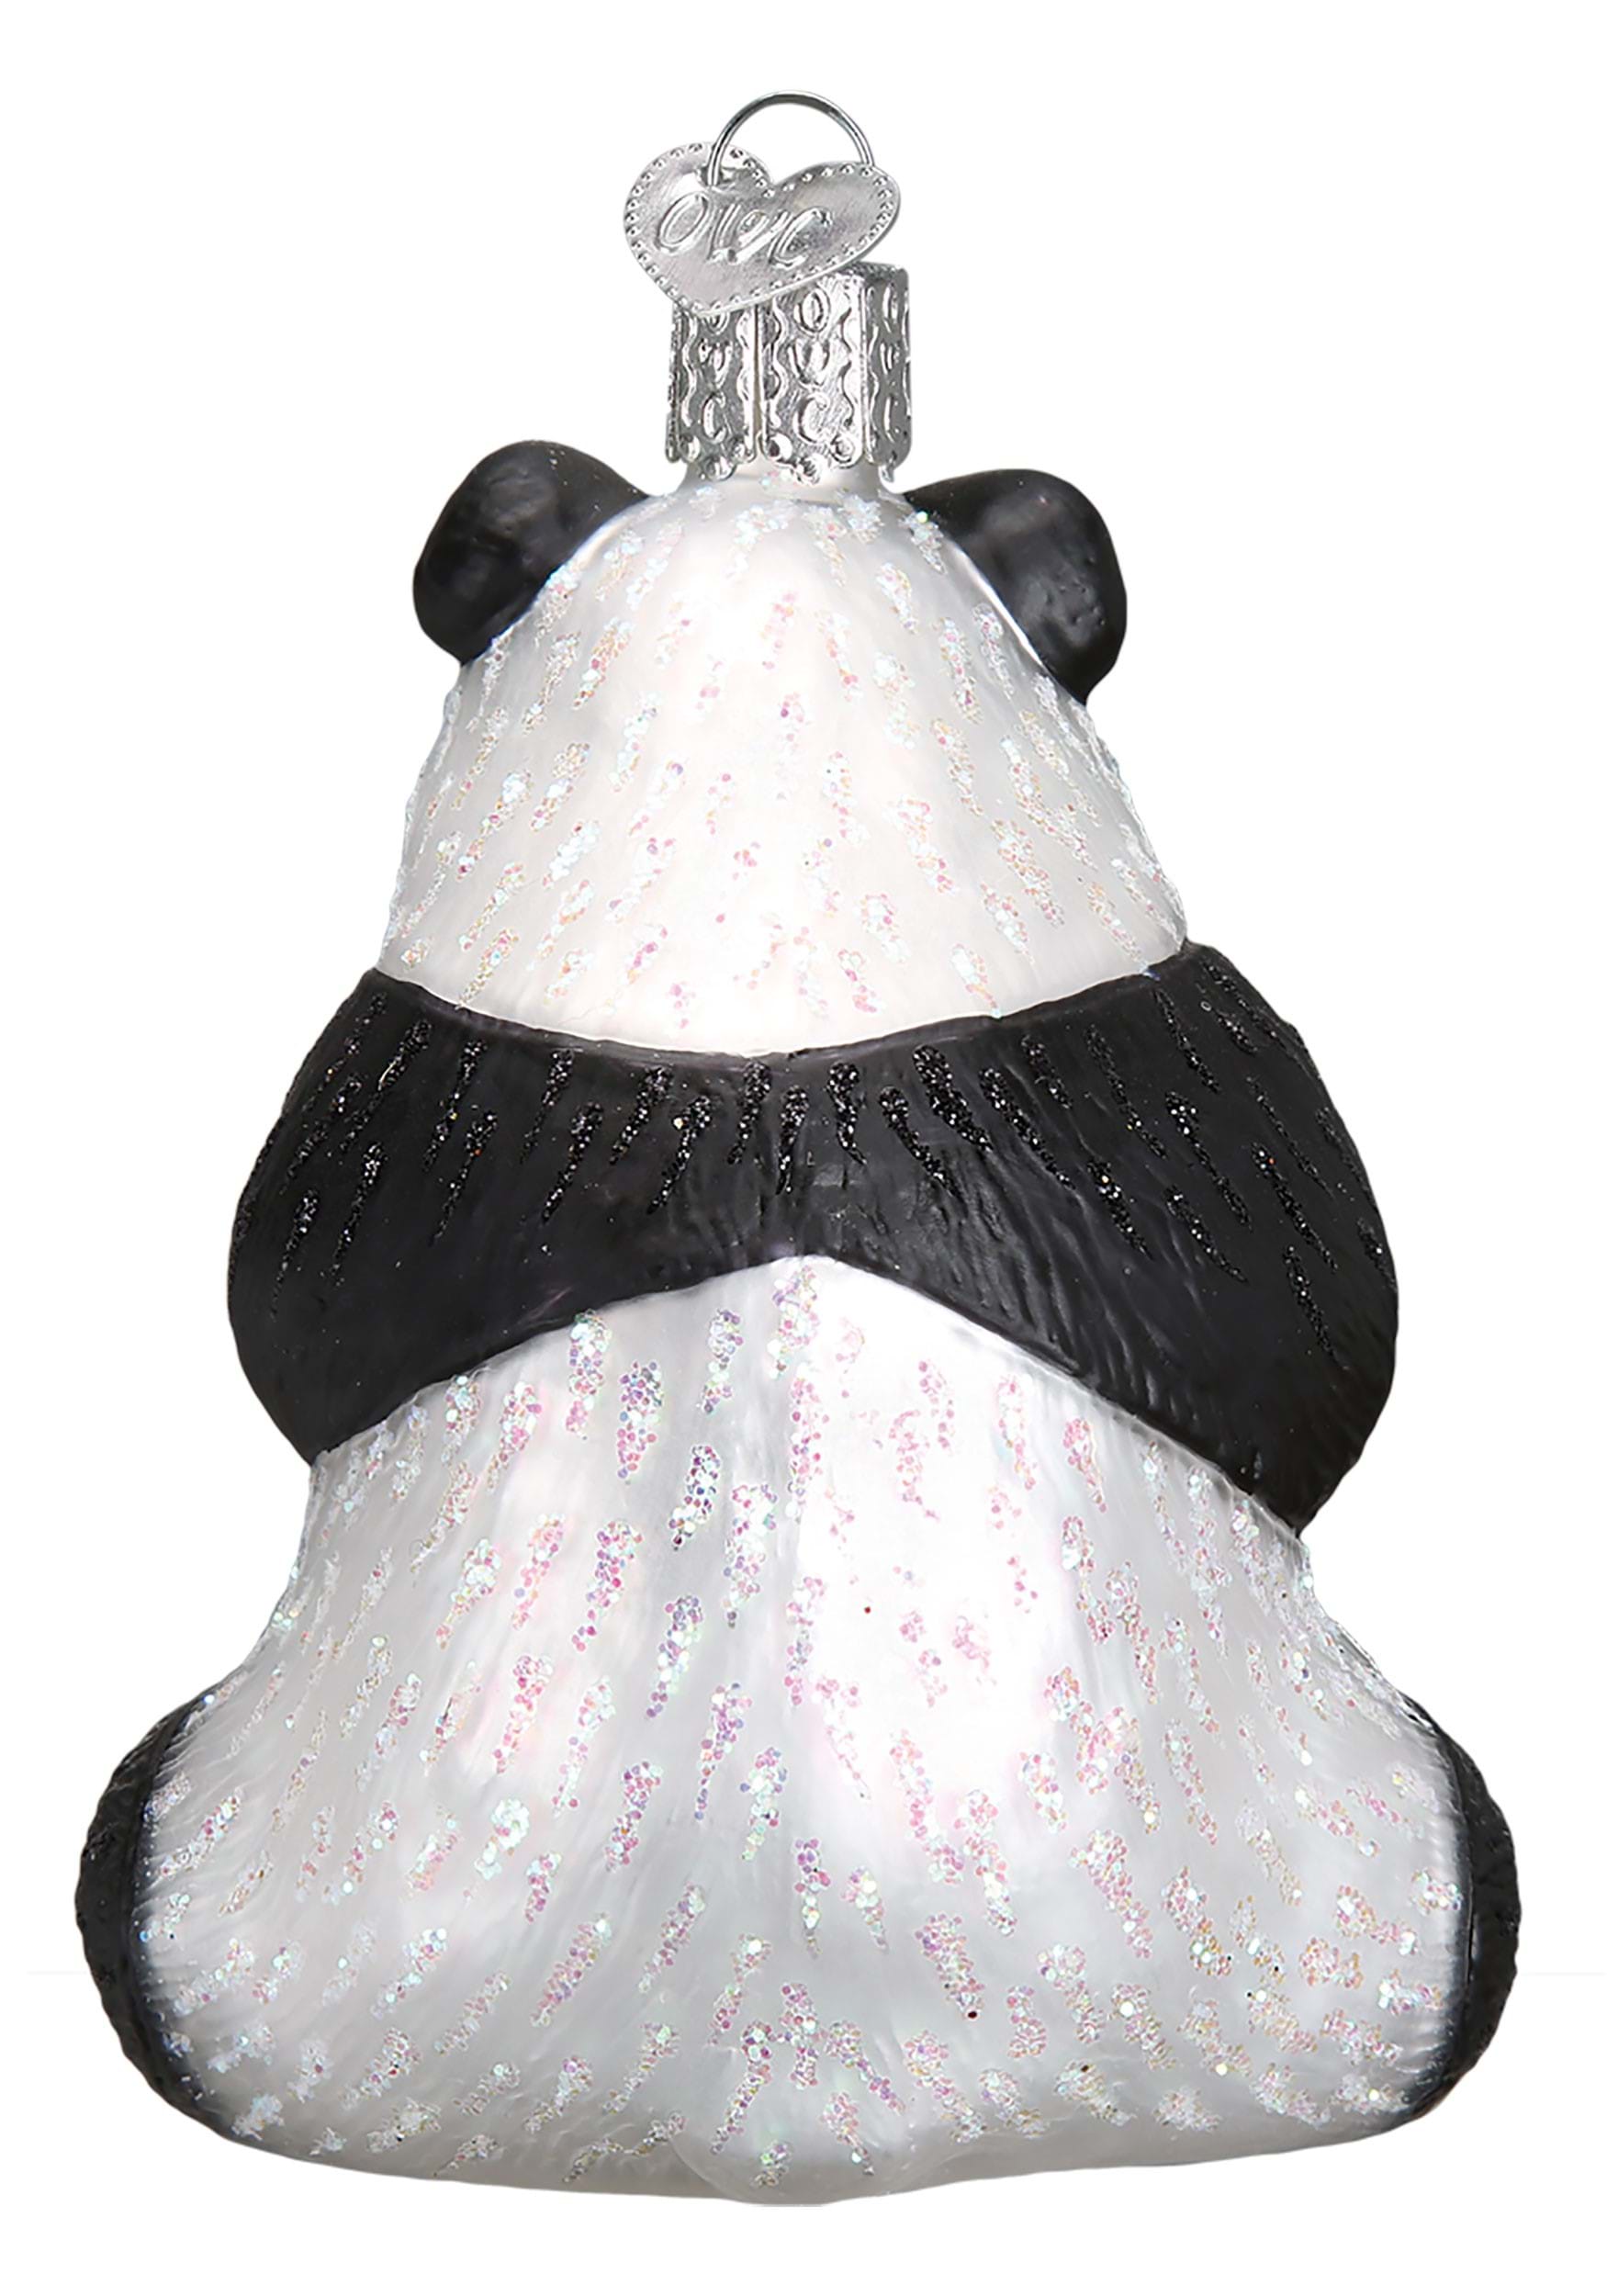 Hanging Glass Blown Panda Bear Ornament